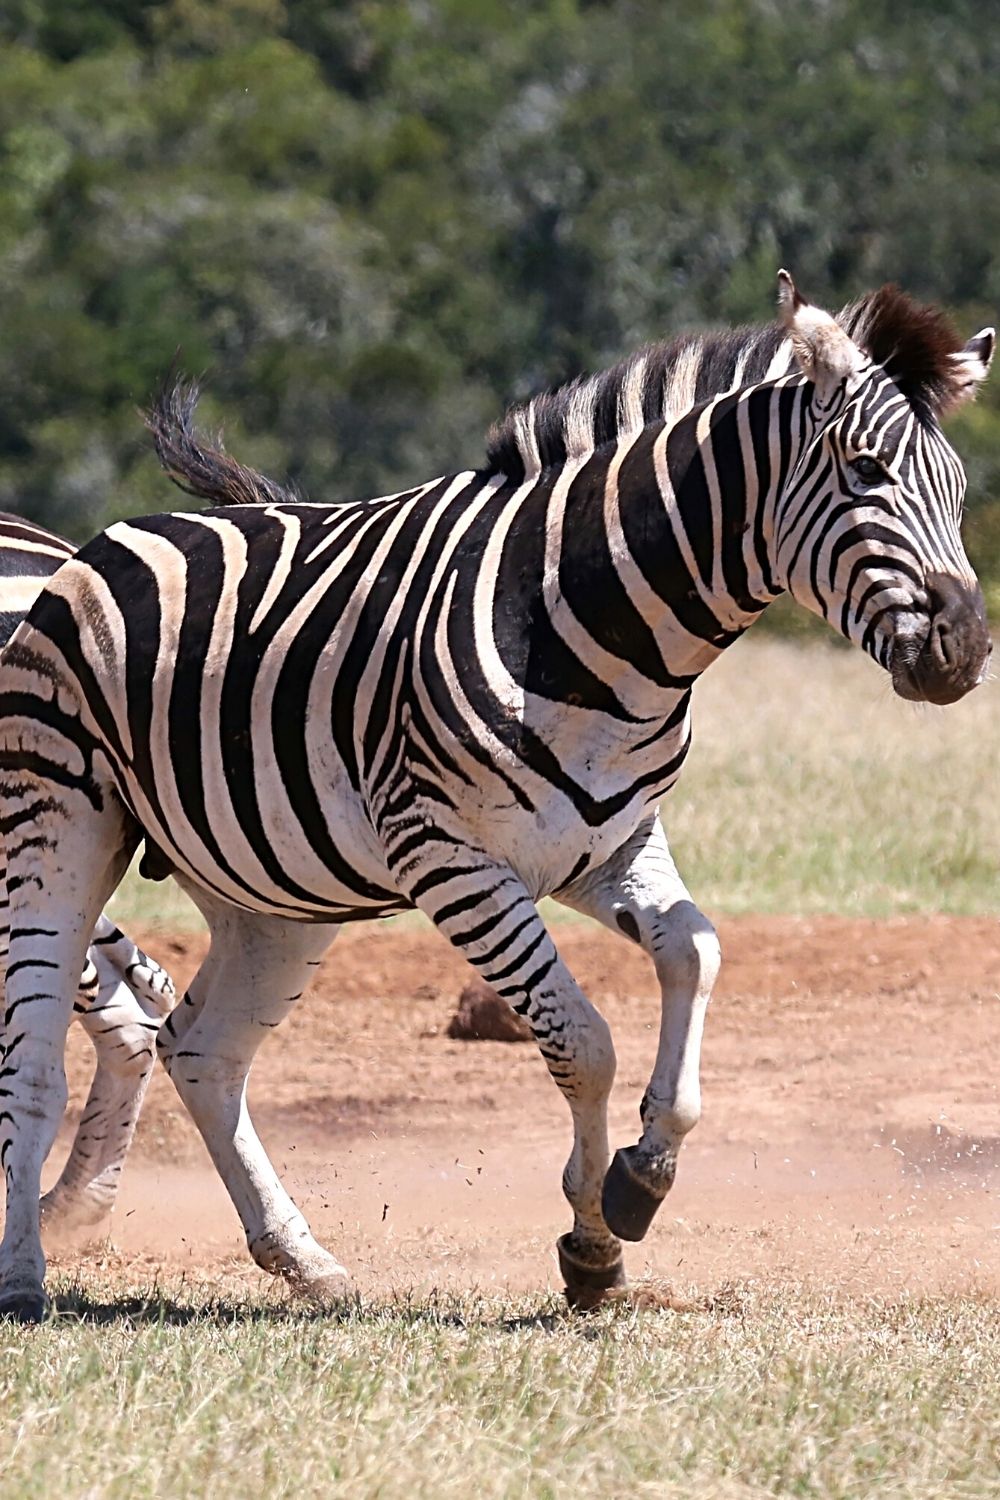 Zebras also attack their newborns to preserve their dominance (males) in the herd